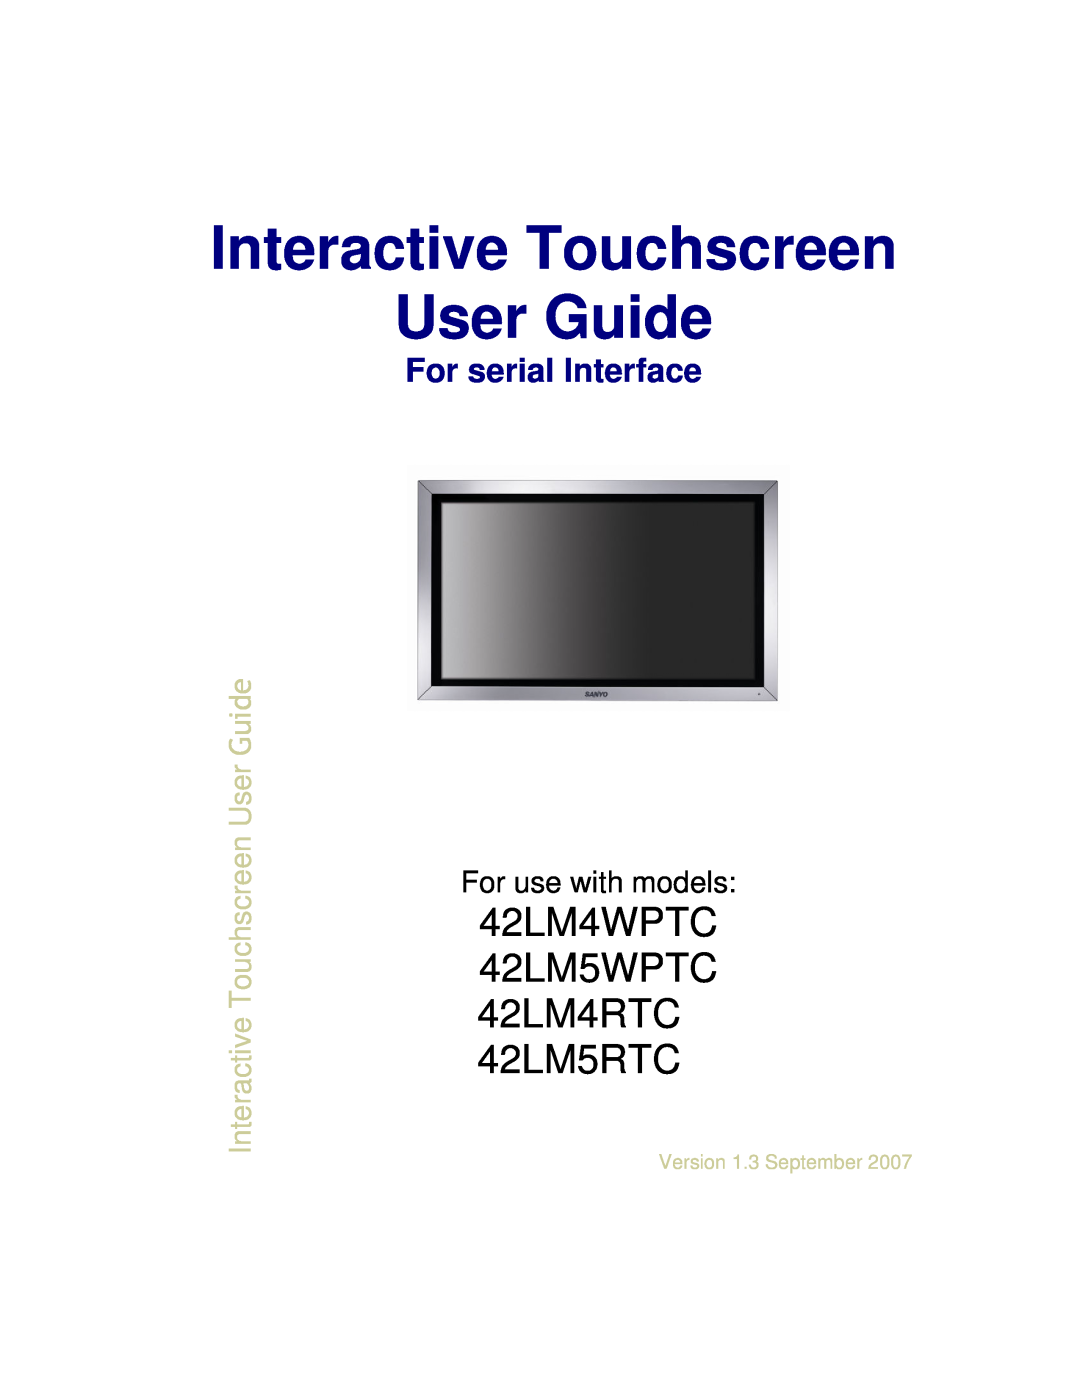 Sanyo manual Interactive Touchscreen User Guide, 42LM4WPTC 42LM5WPTC 42LM4RTC 42LM5RTC, For serial Interface 